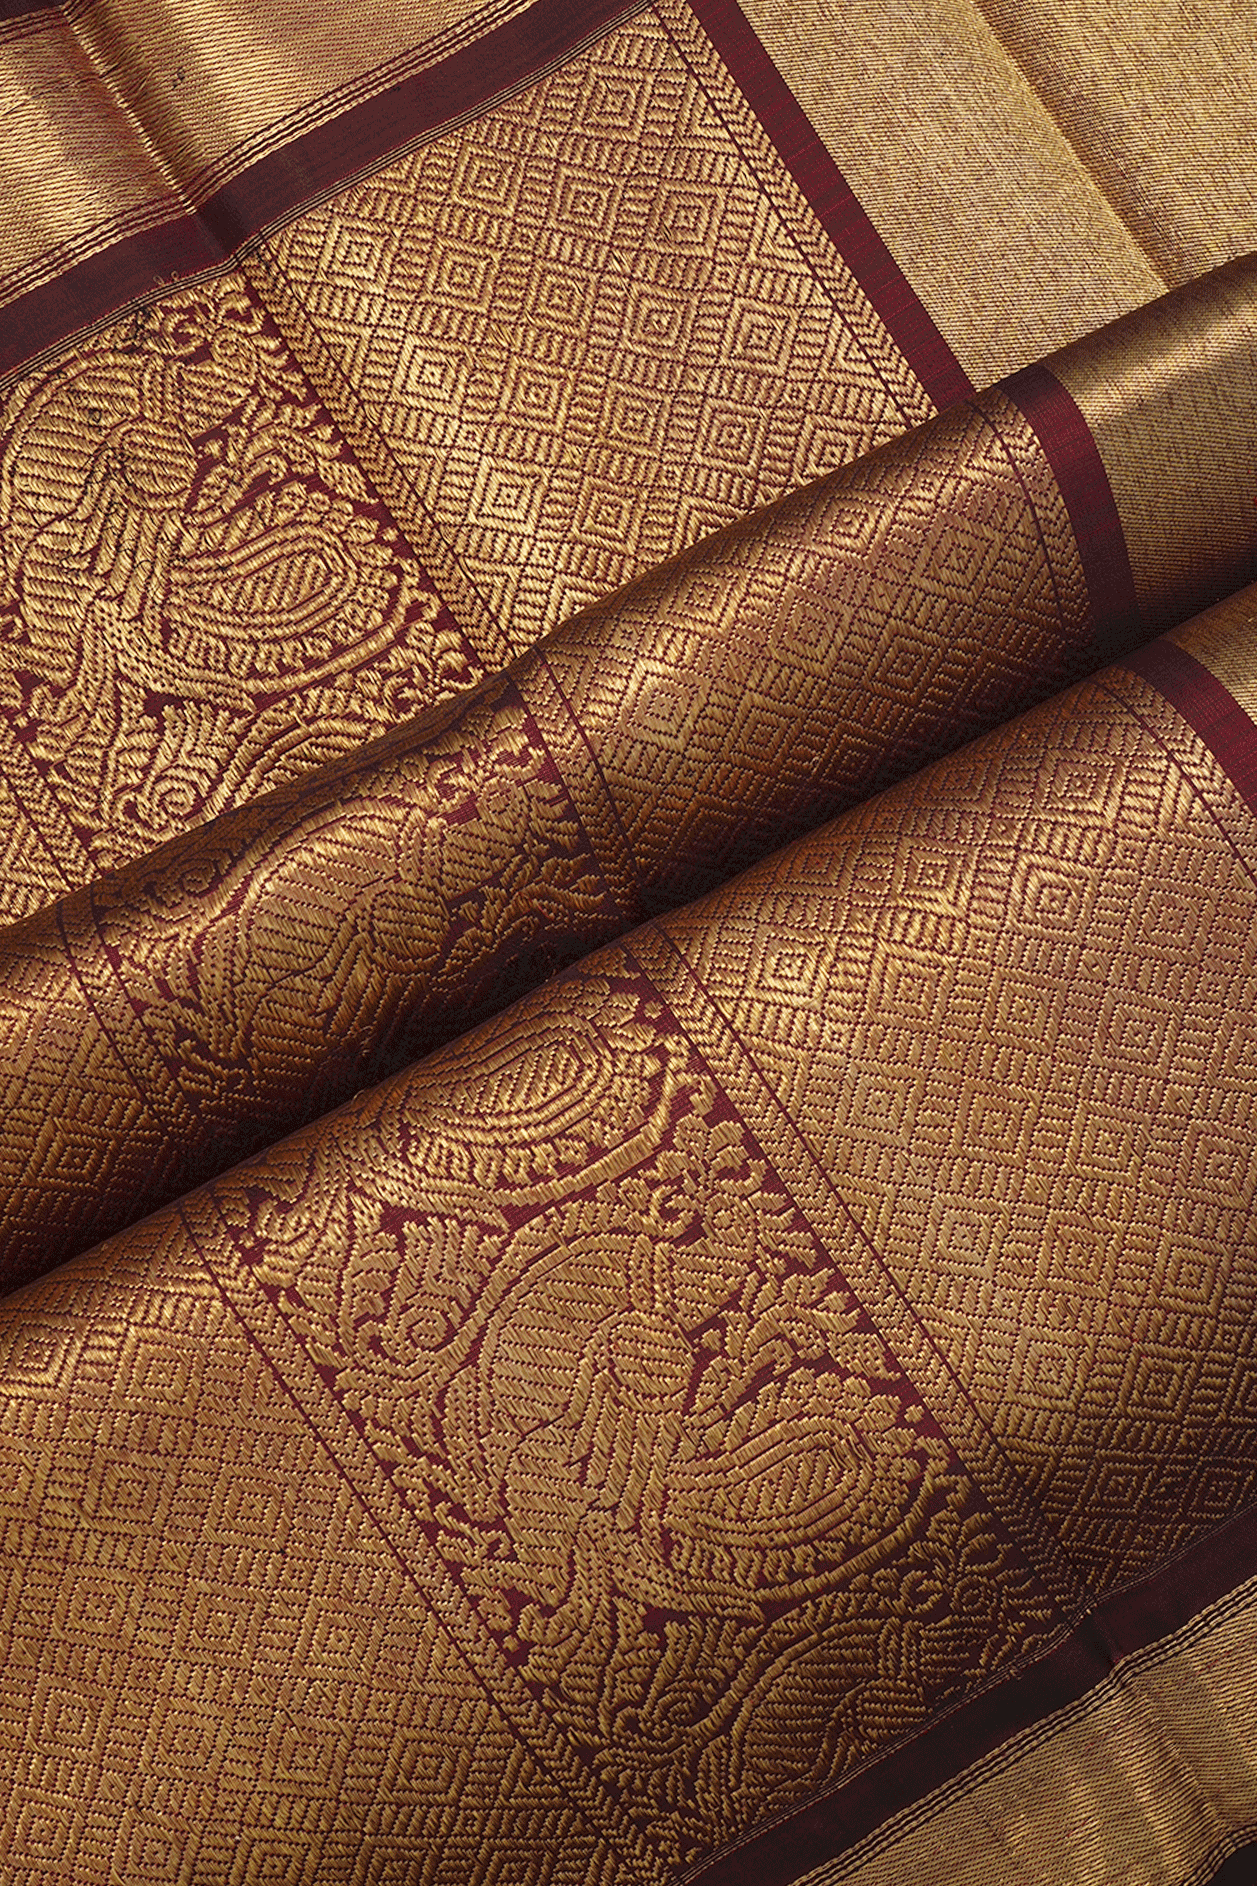 Twill Weave Border Plain Dark Maroon Kanchipuram Silk Saree